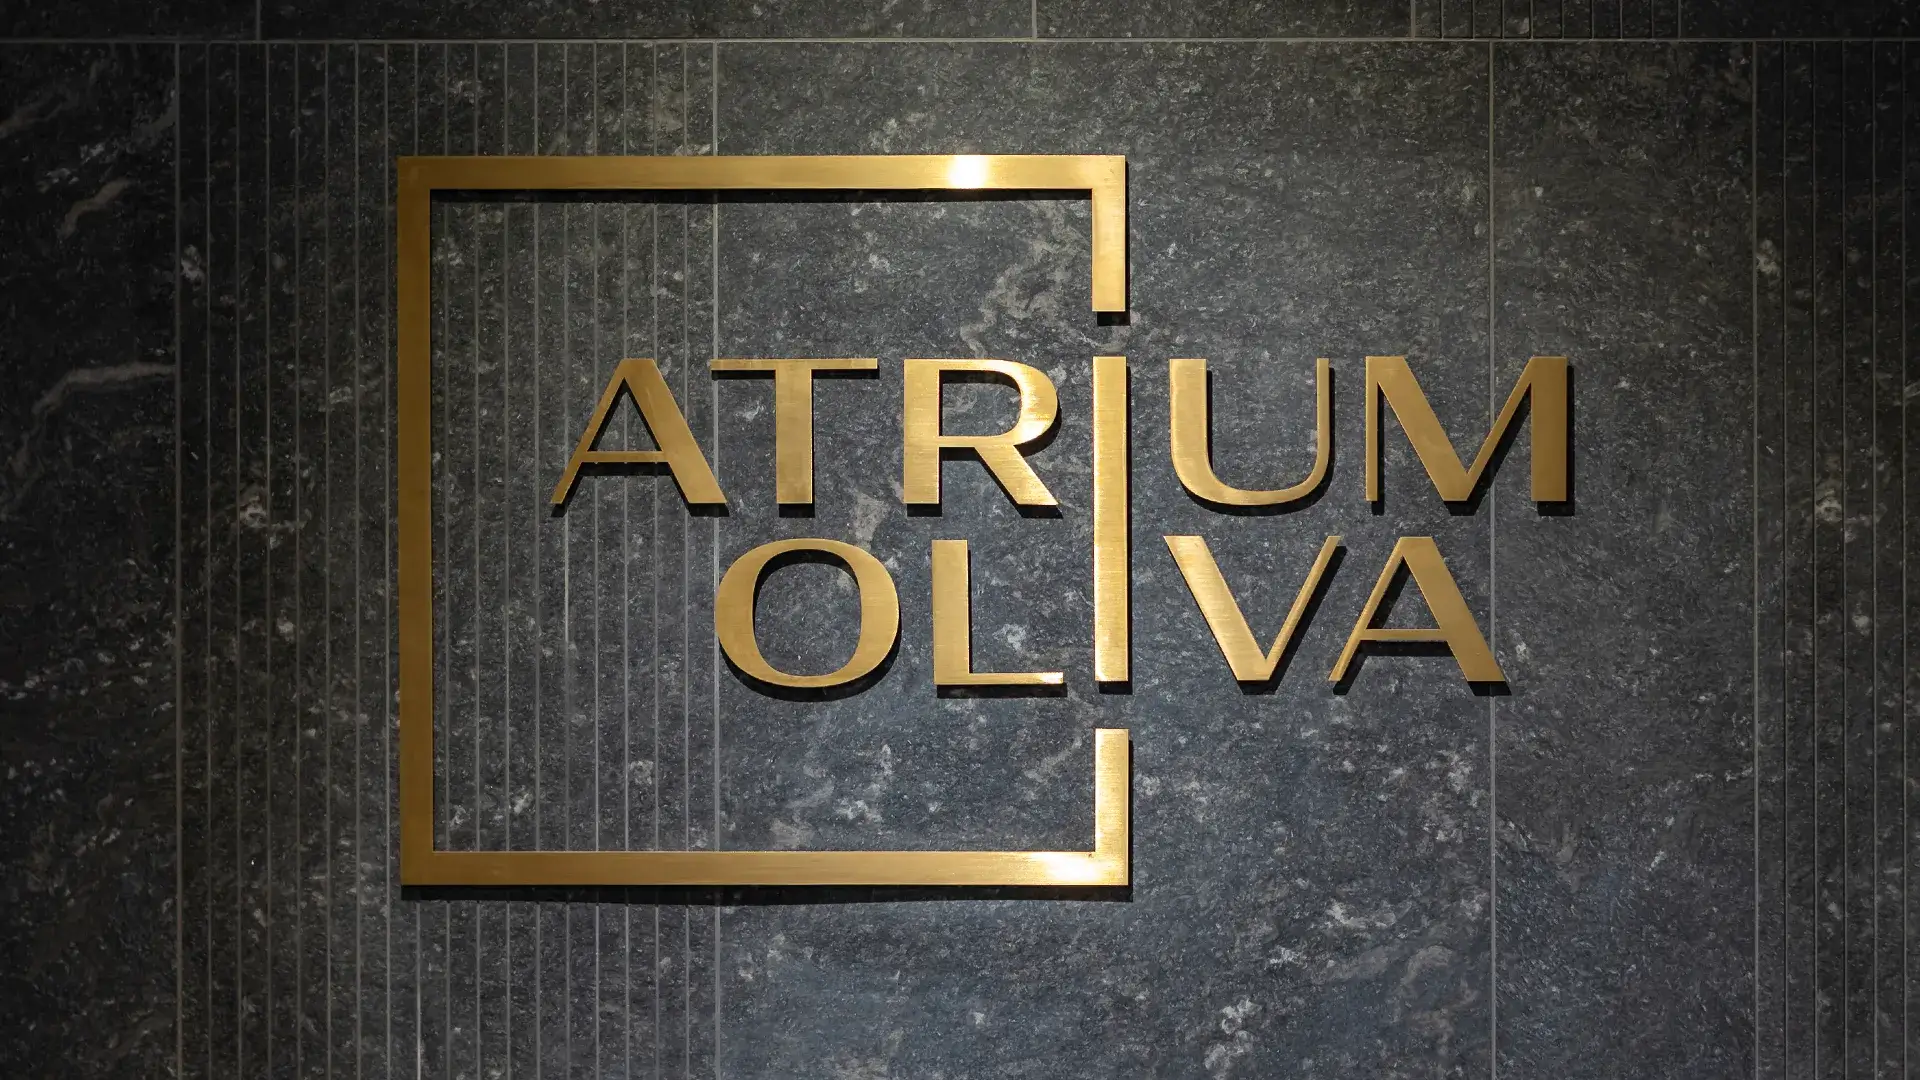 Lettere piatte Atrium Oliva in lamiera spazzolata